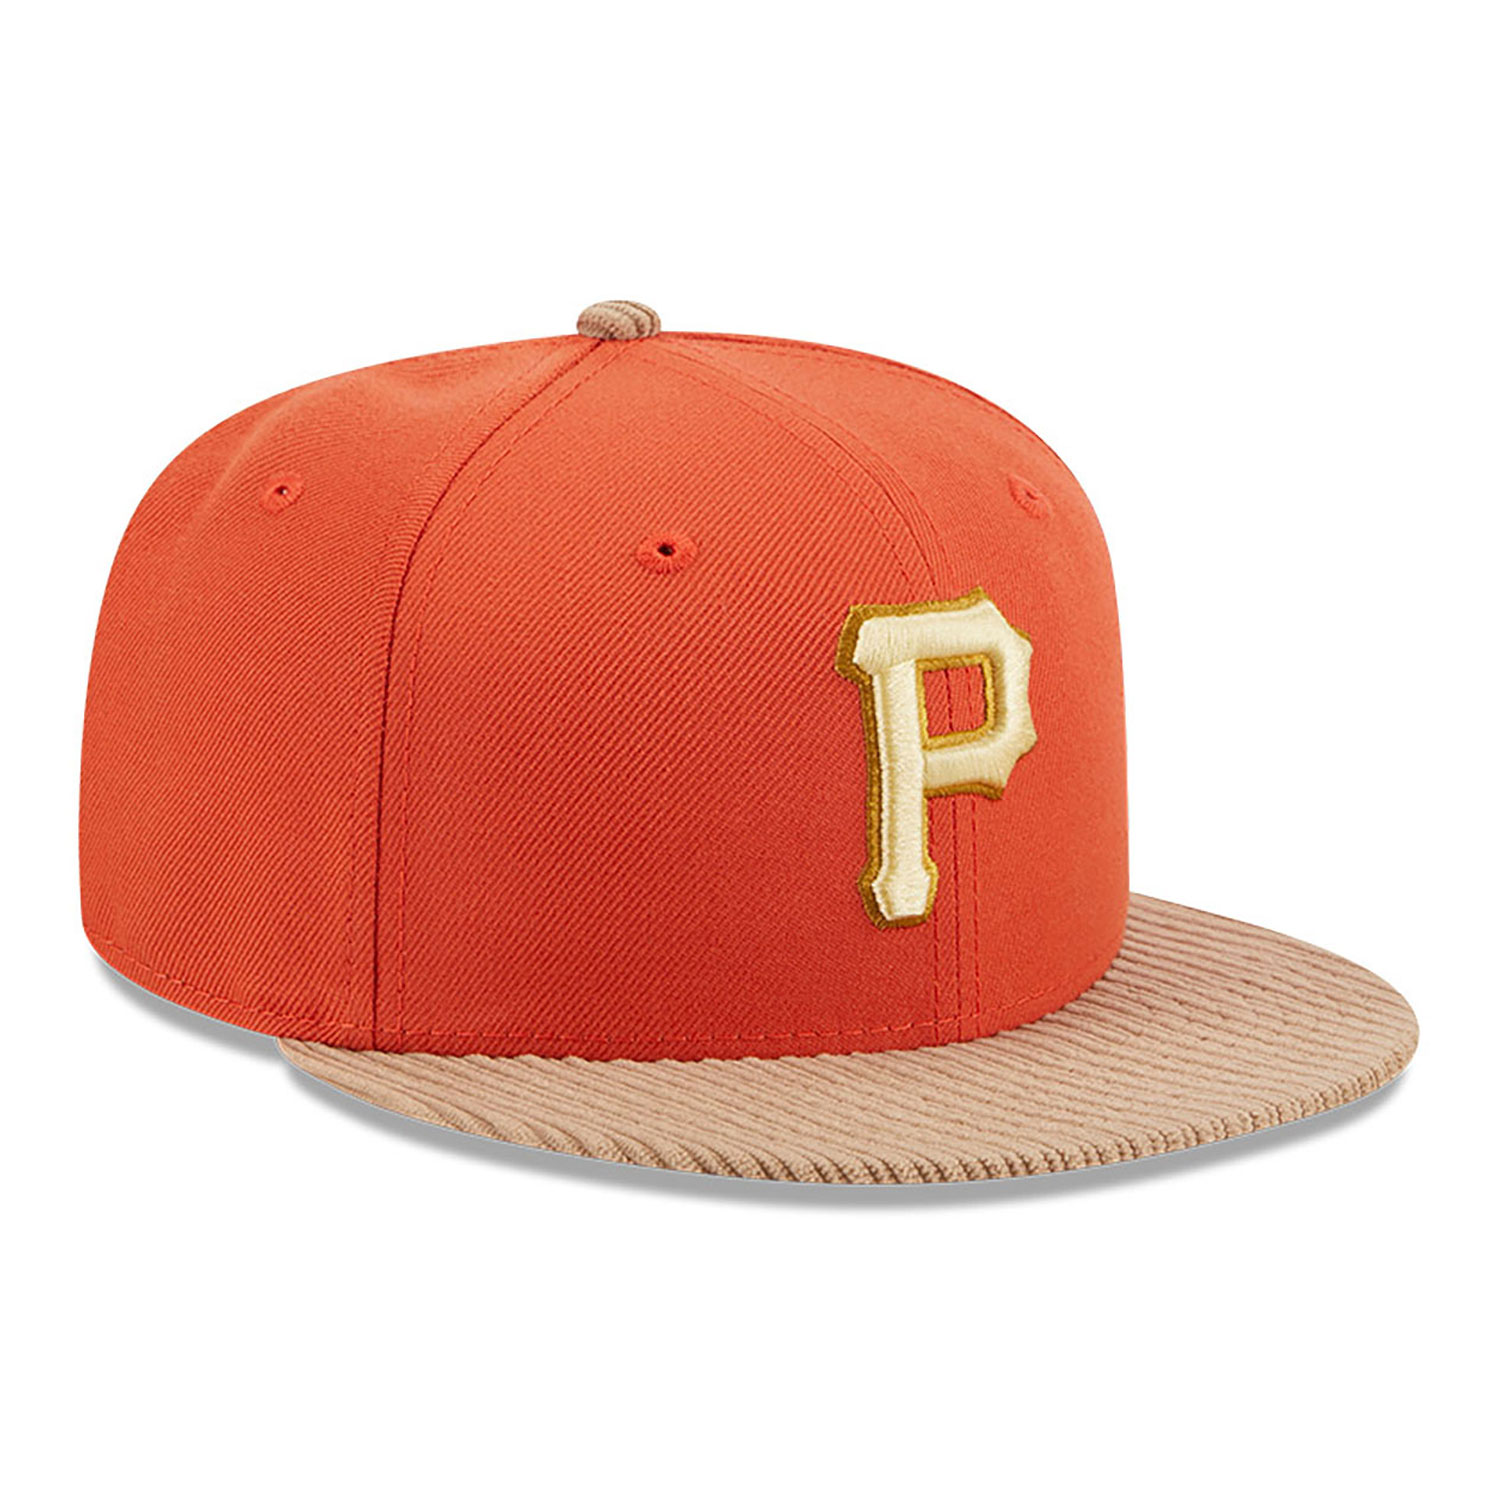 Pittsburgh Pirates MLB Autumn Wheat Dark Orange 9FIFTY Snapback Cap